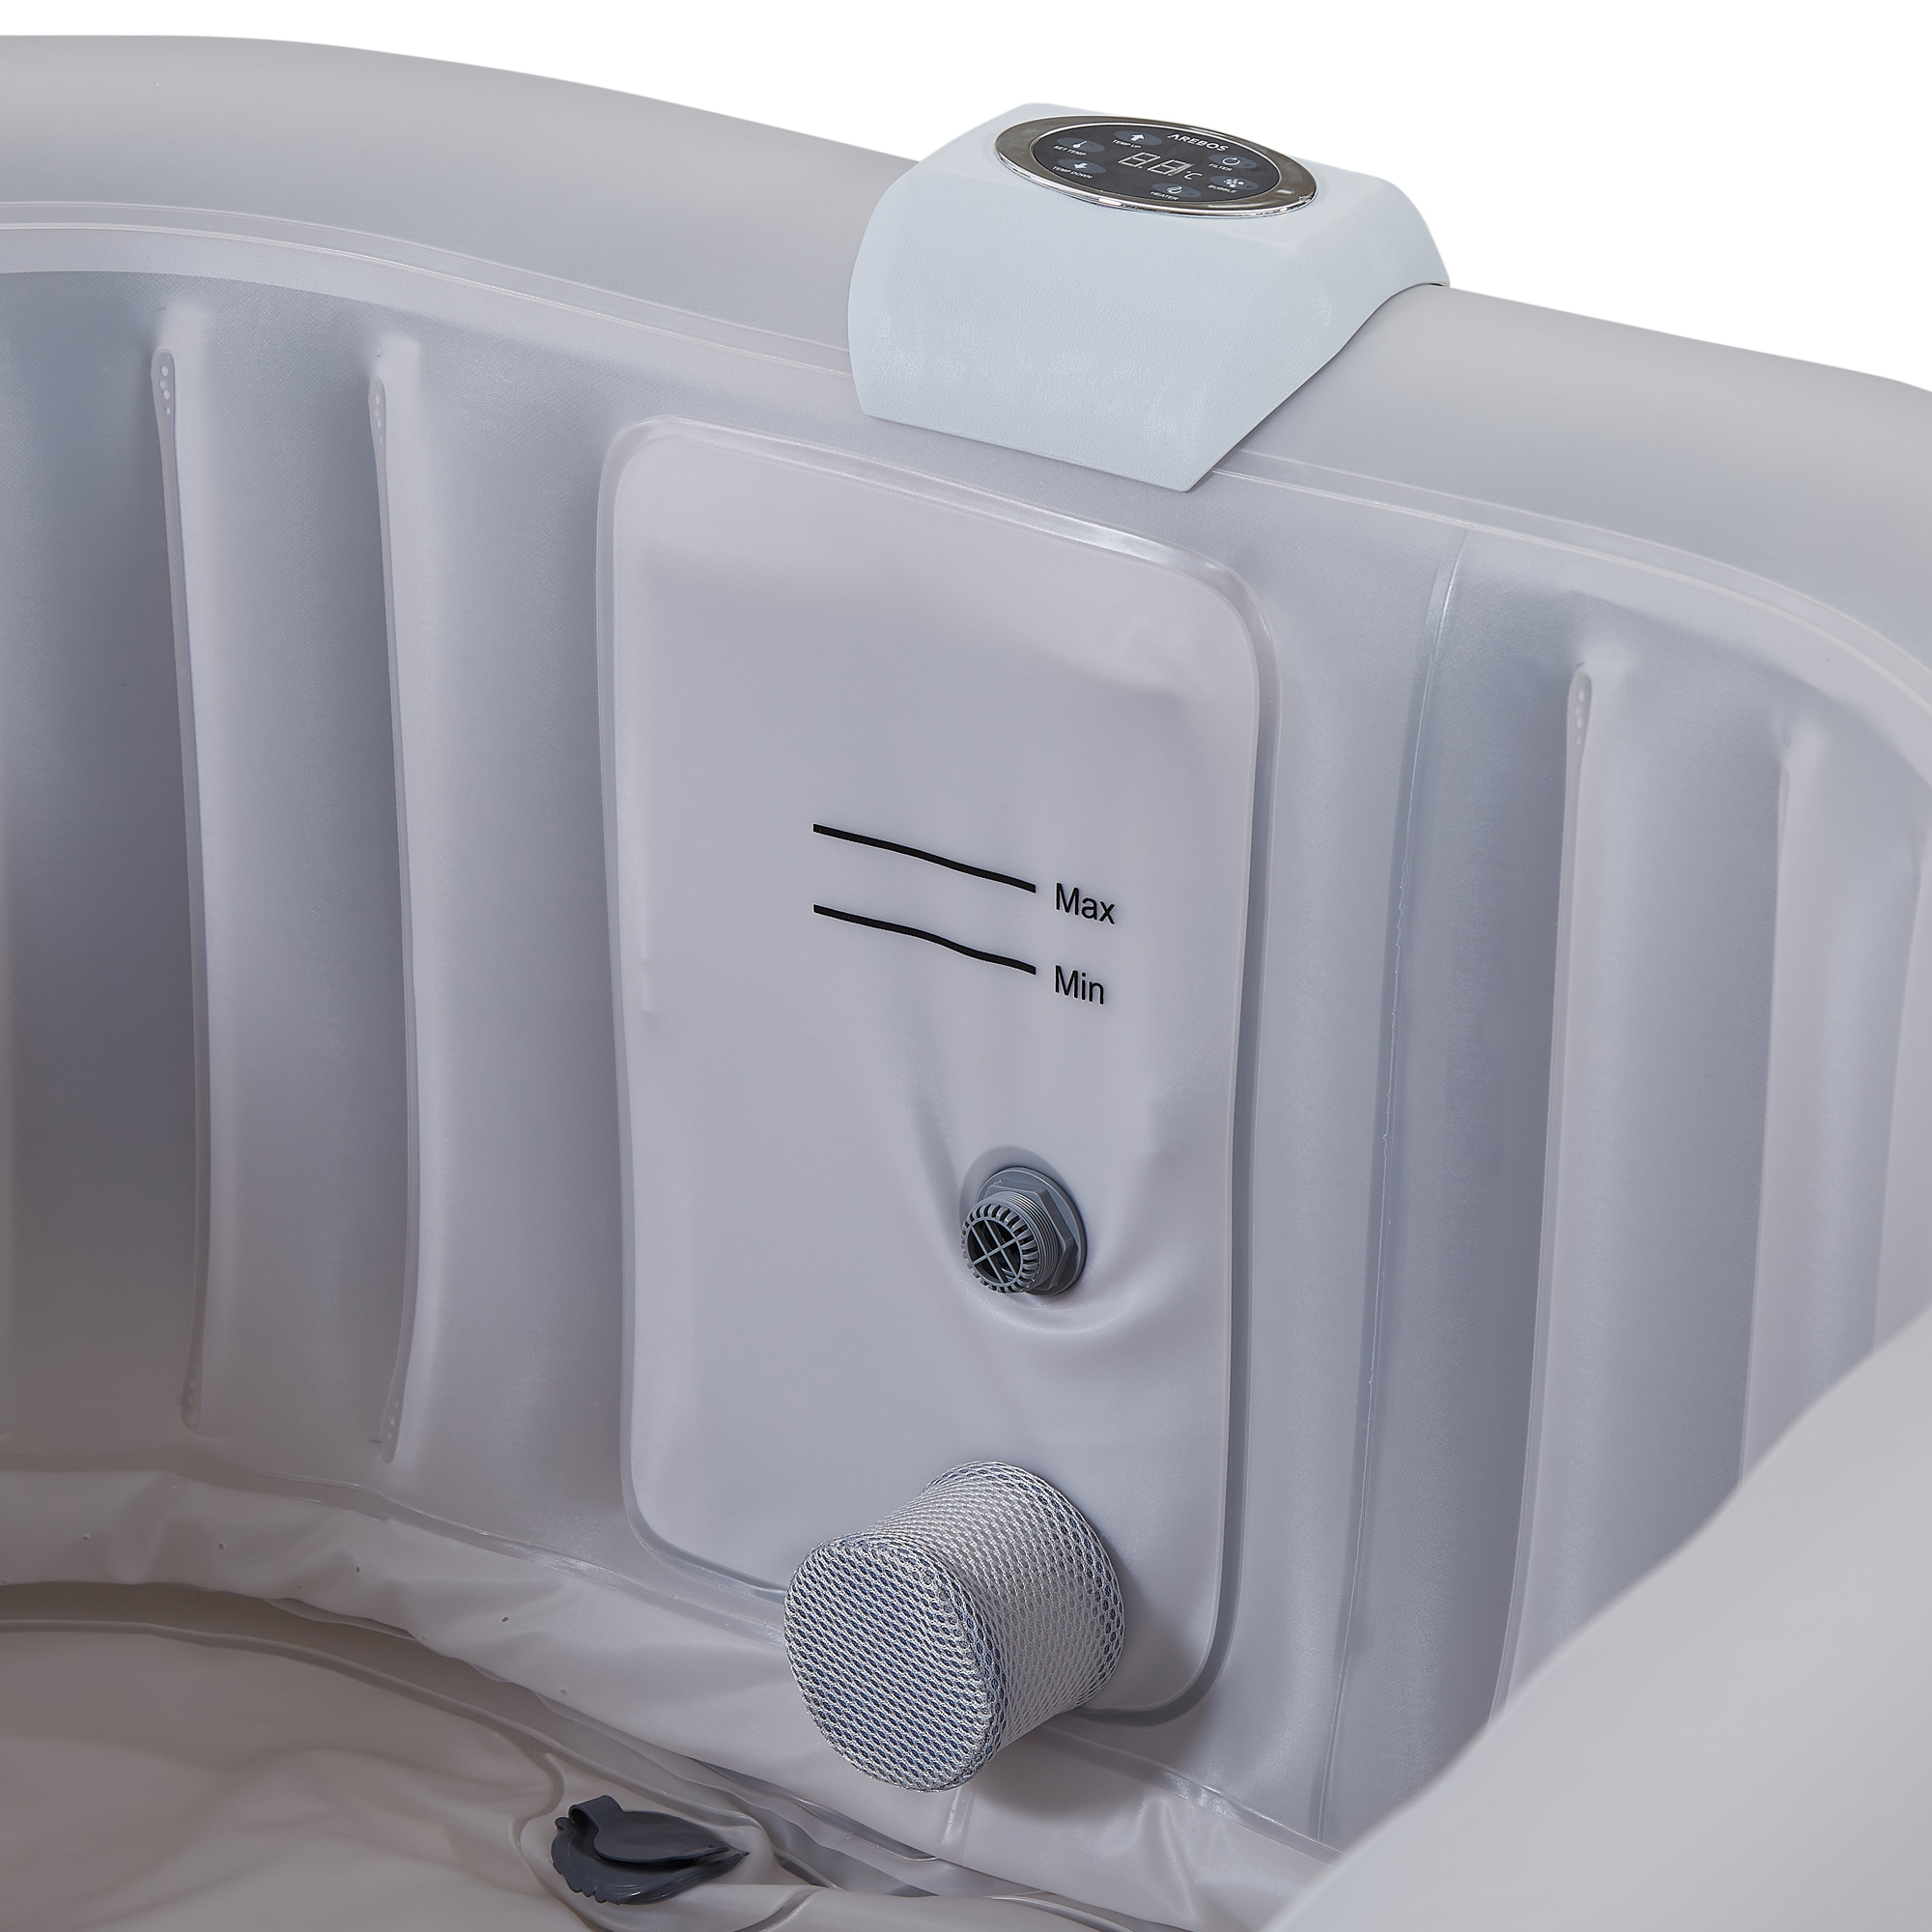 AREBOS mit LED 4 Personen W, Schwarz Whirlpool 2400 Massage oktogonal In-Outdoor